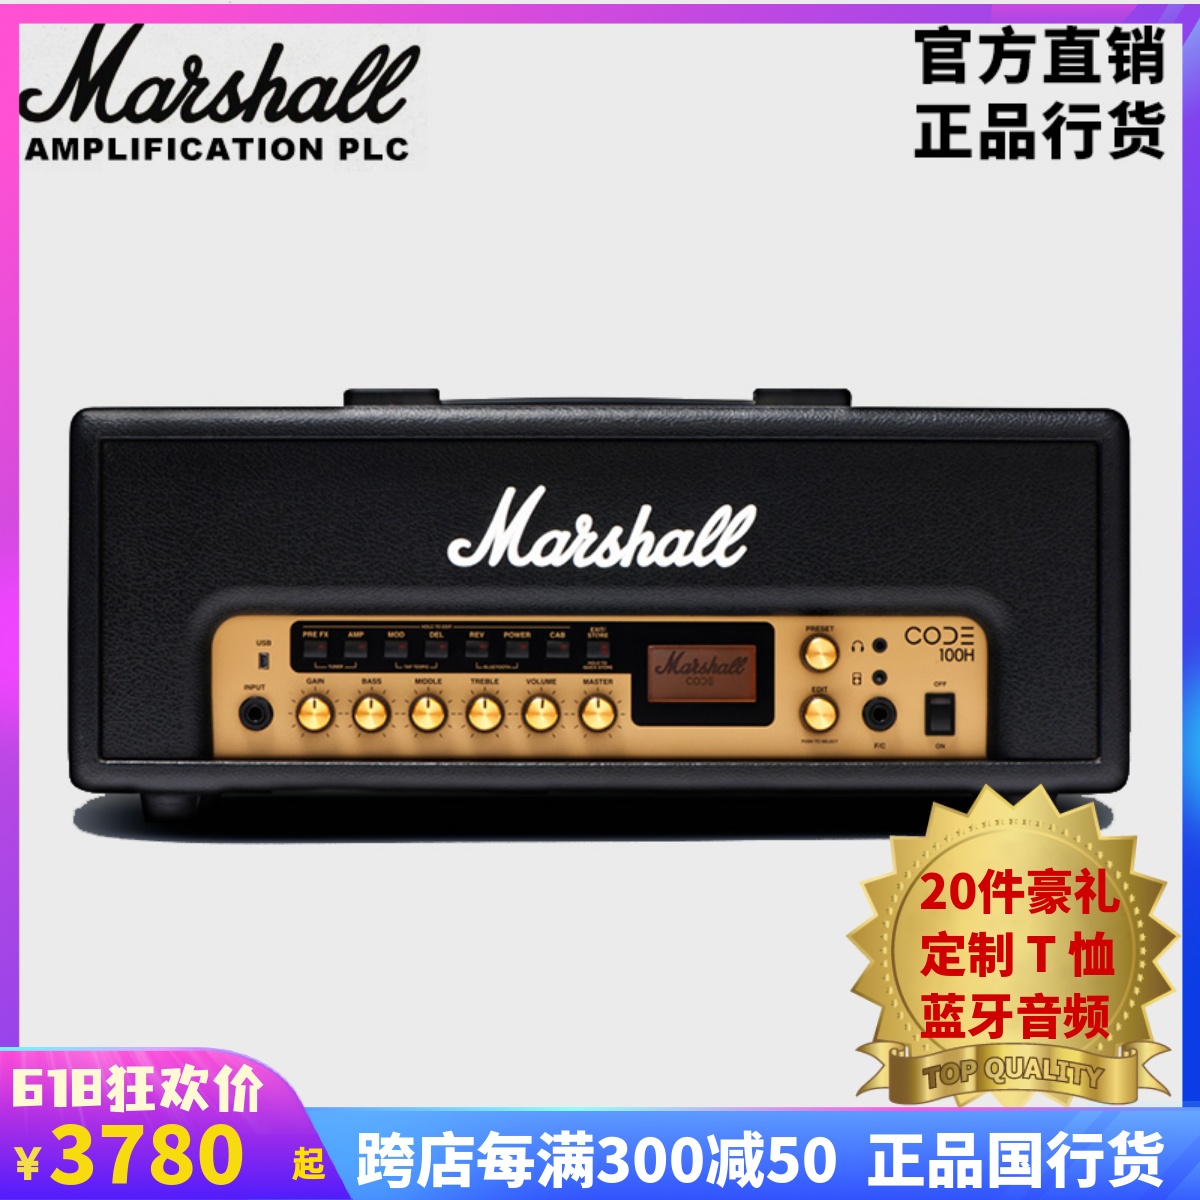 MARSHALL马歇尔吉他音箱CODE100H电吉他音箱数字蓝牙音箱马勺